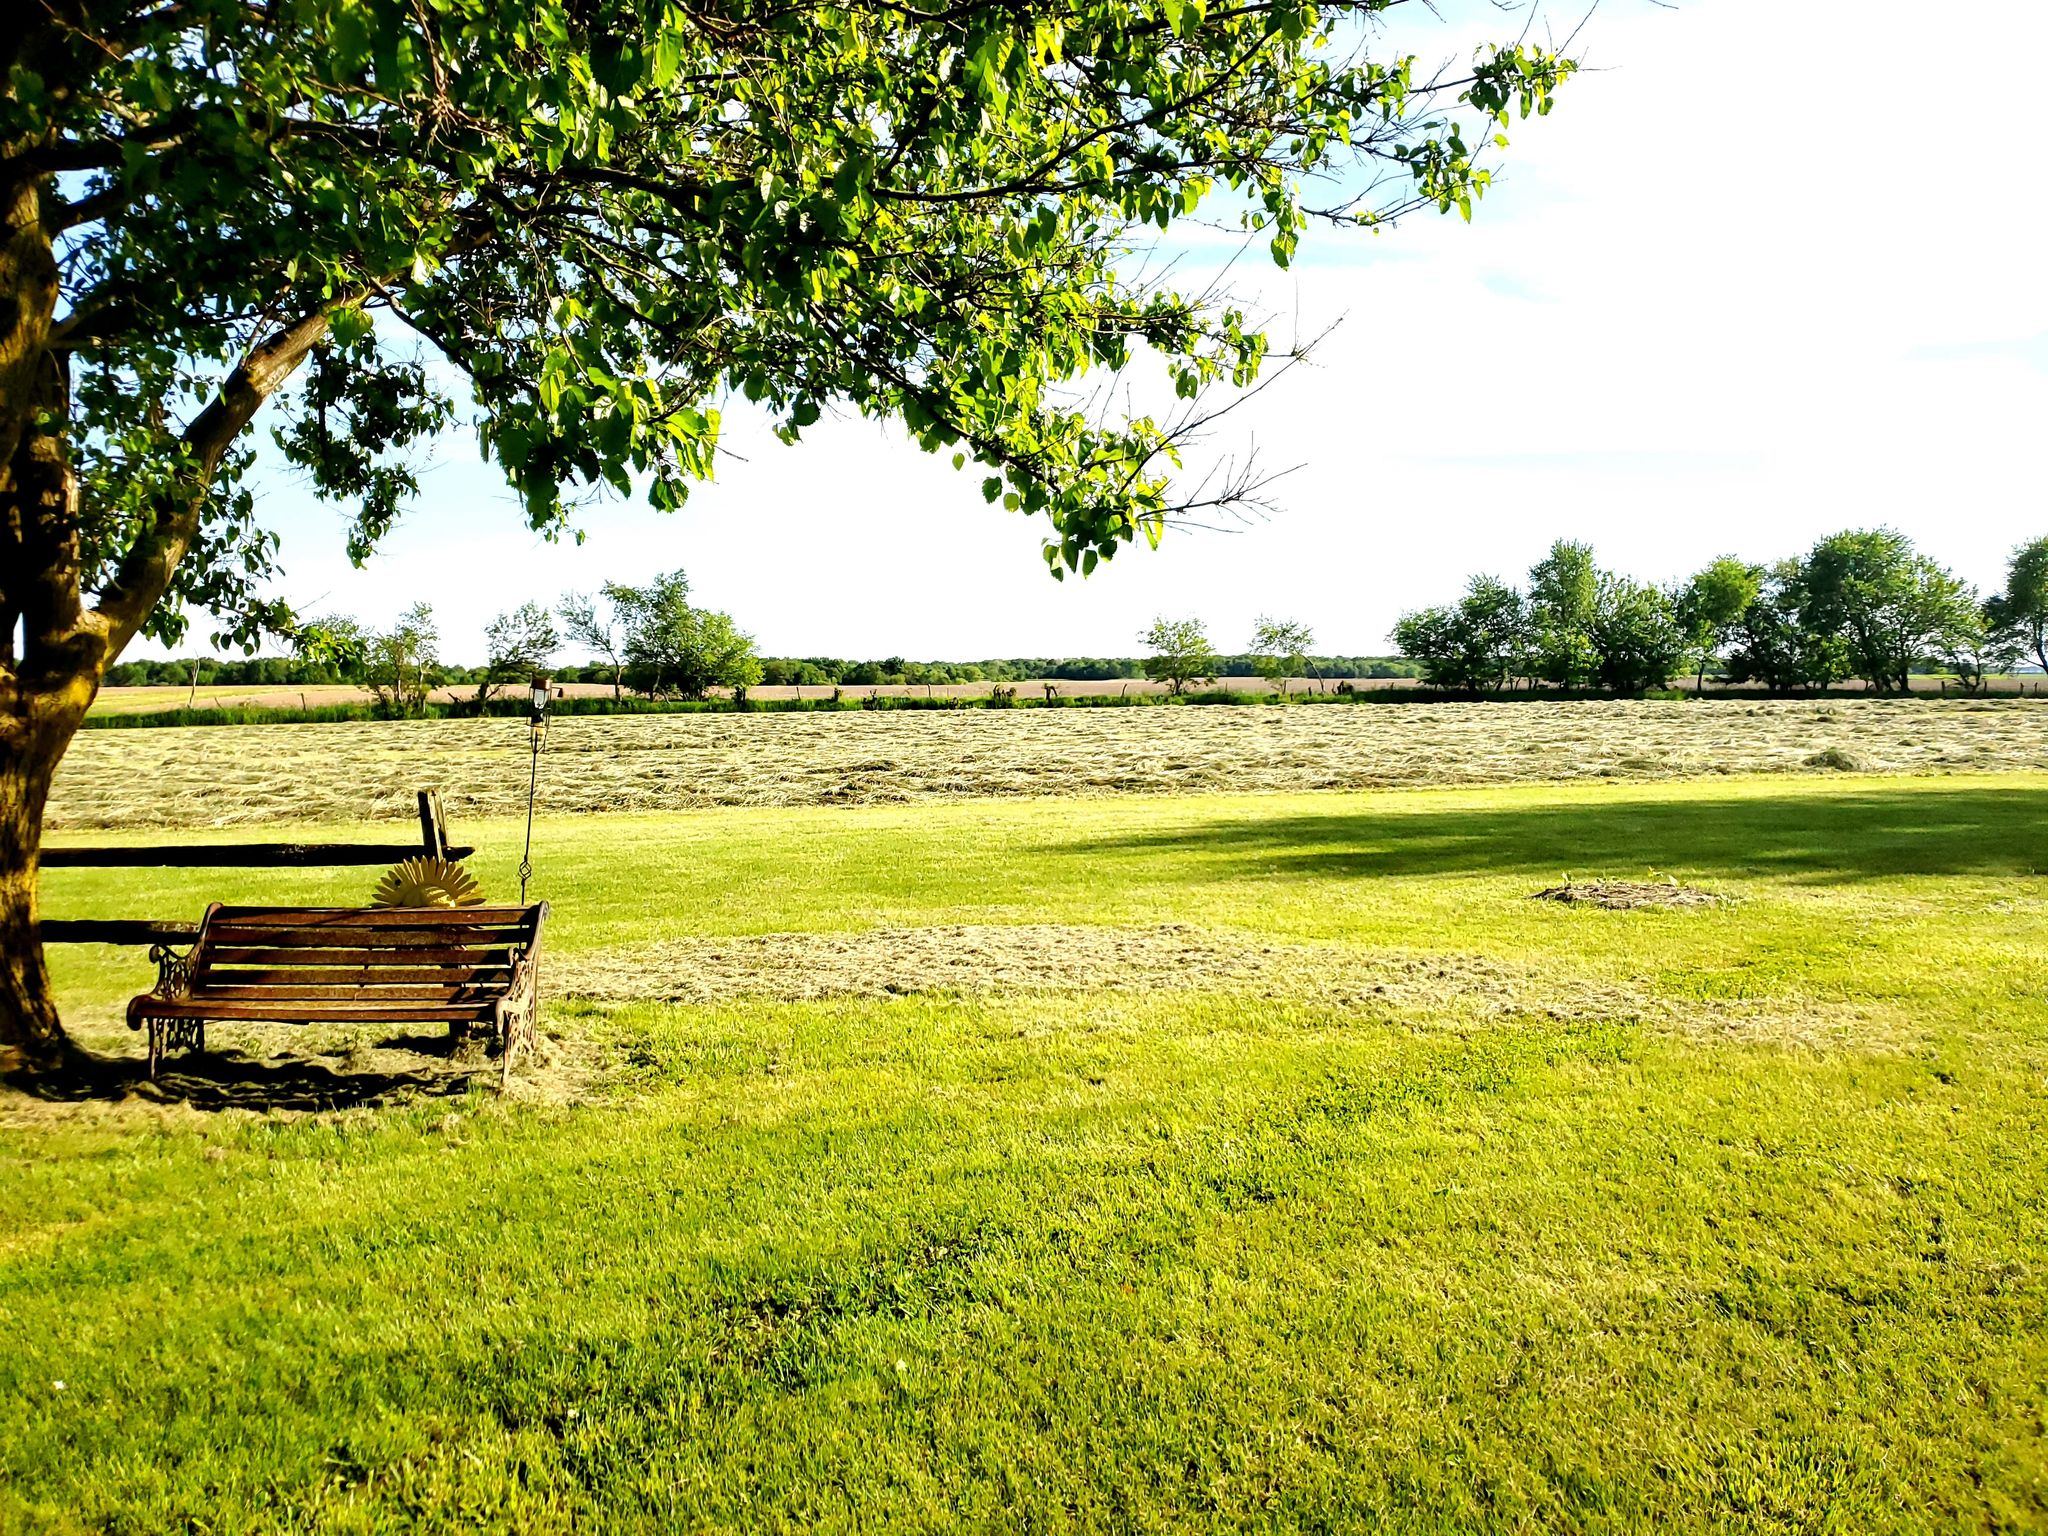 Hay field in Illinois, US.